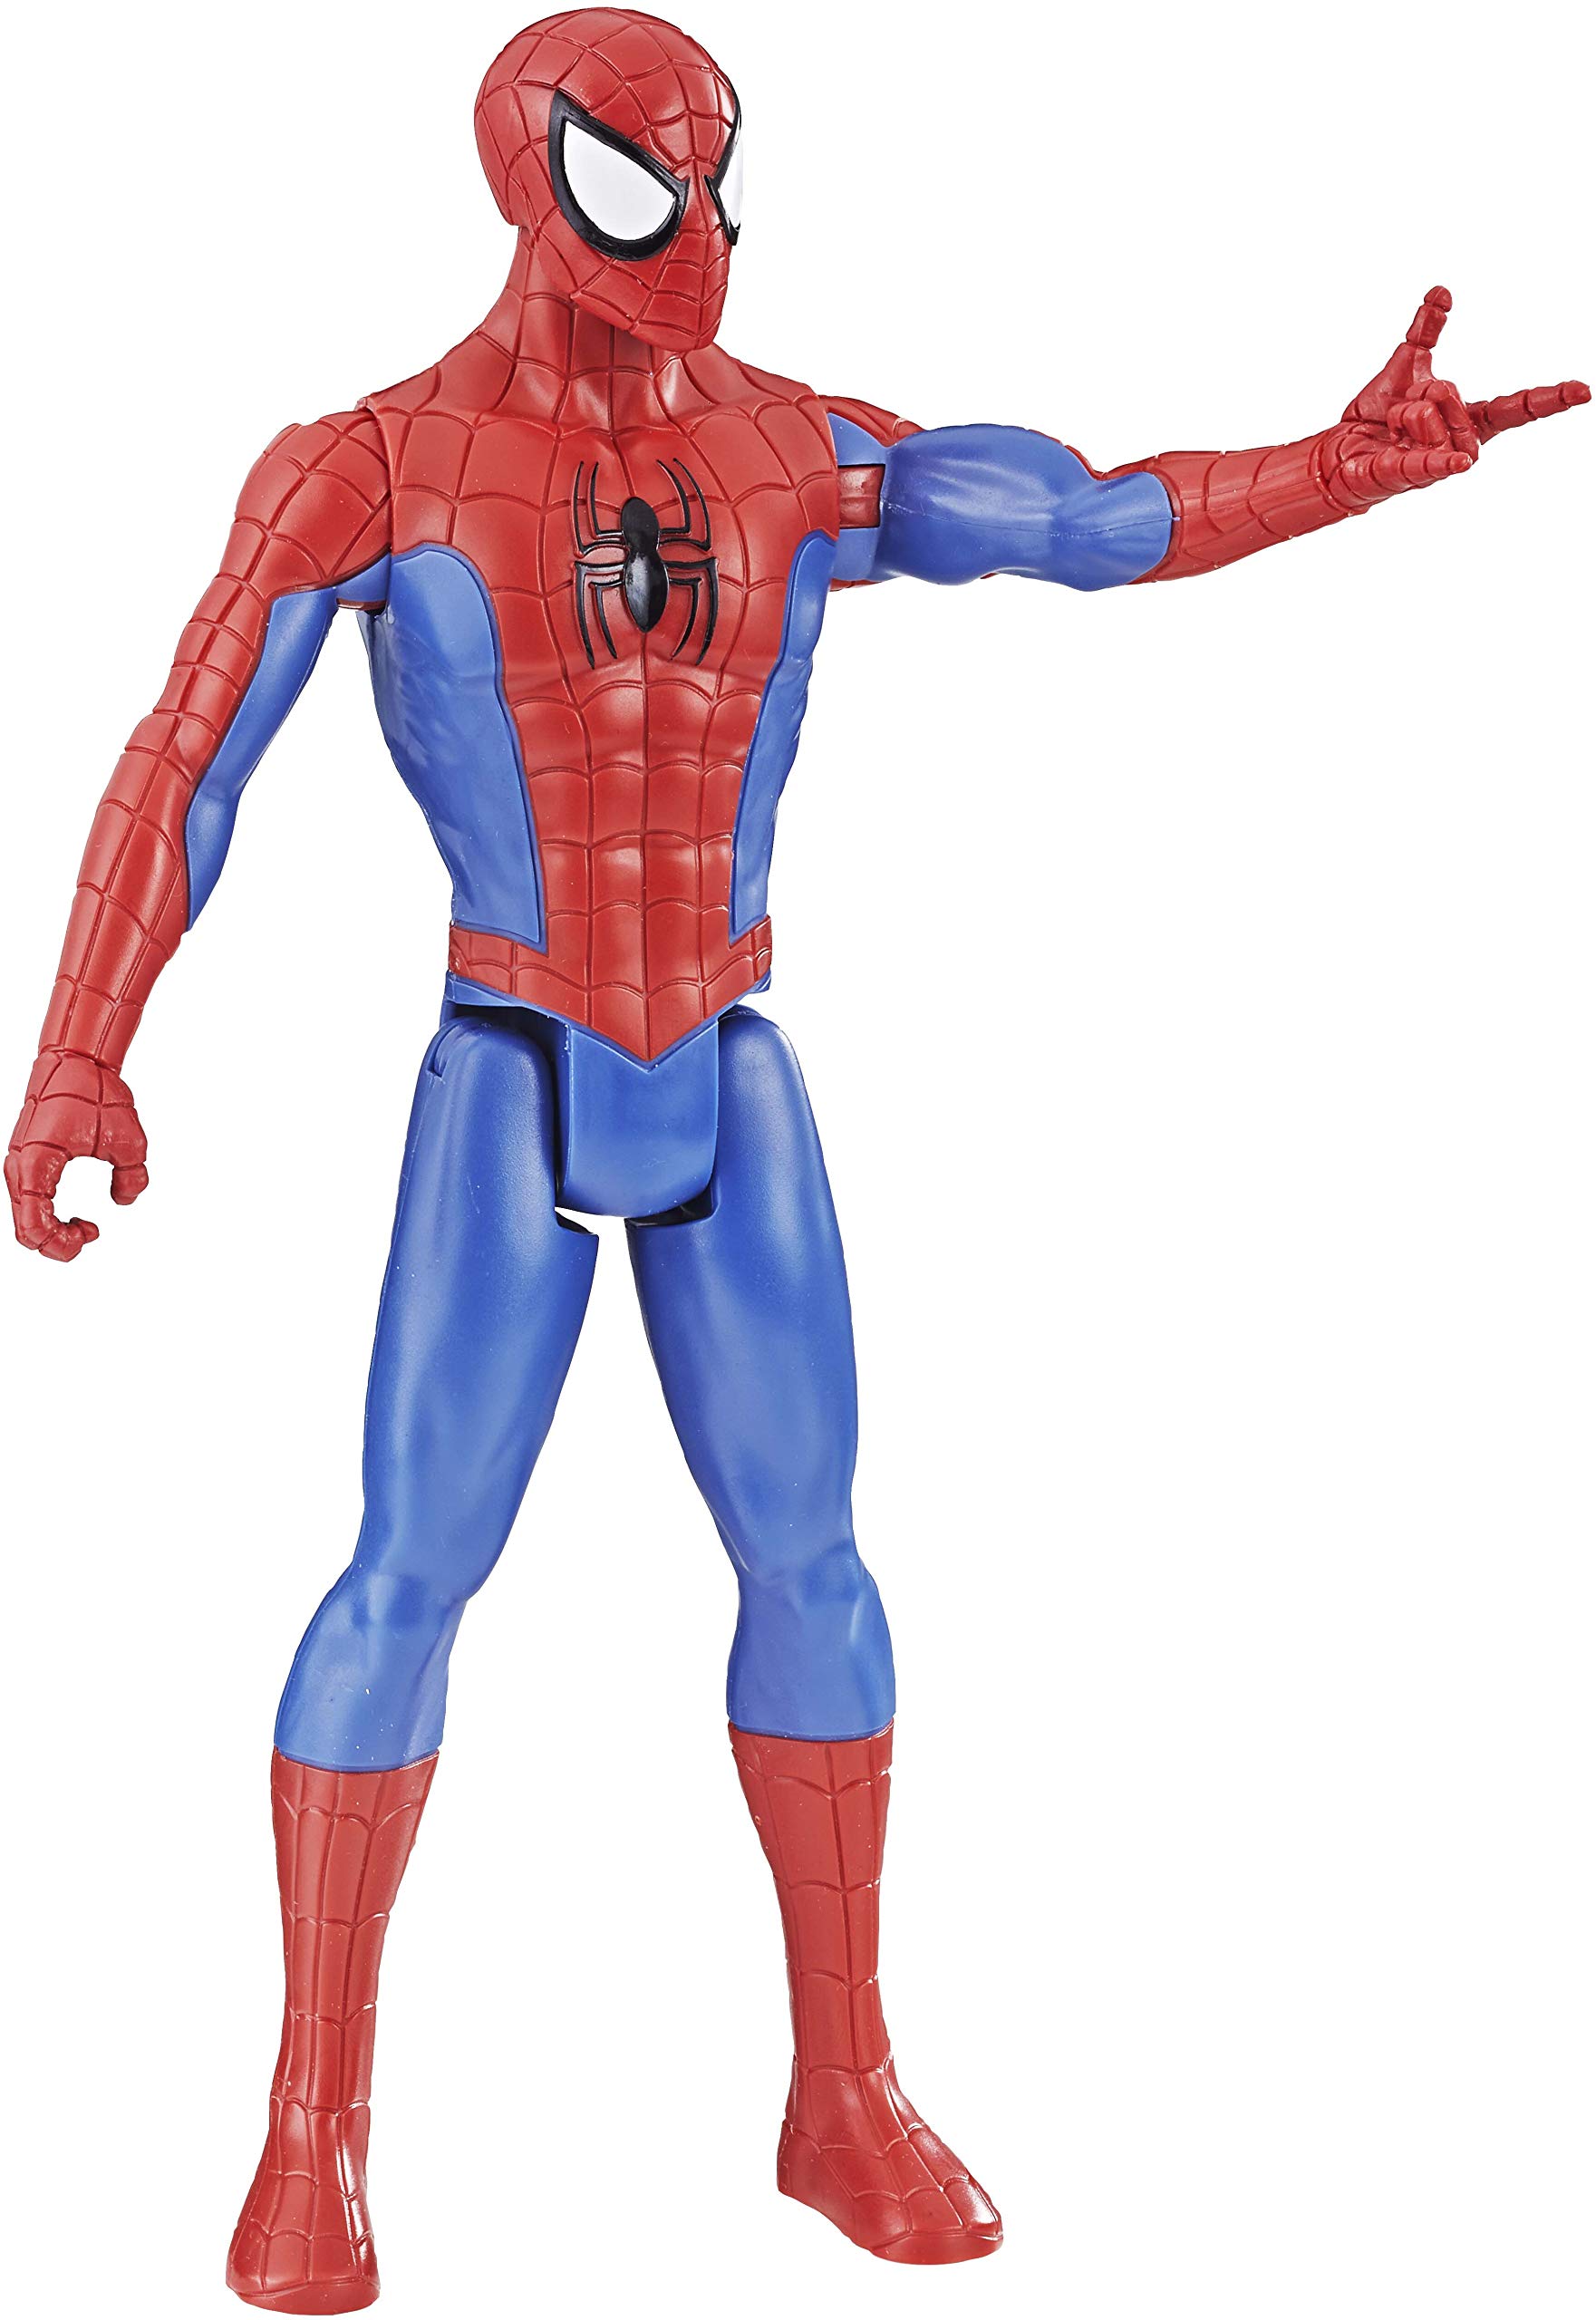 Spider-Man E0649 Titan Hero Series Action Figure, Pack of 1